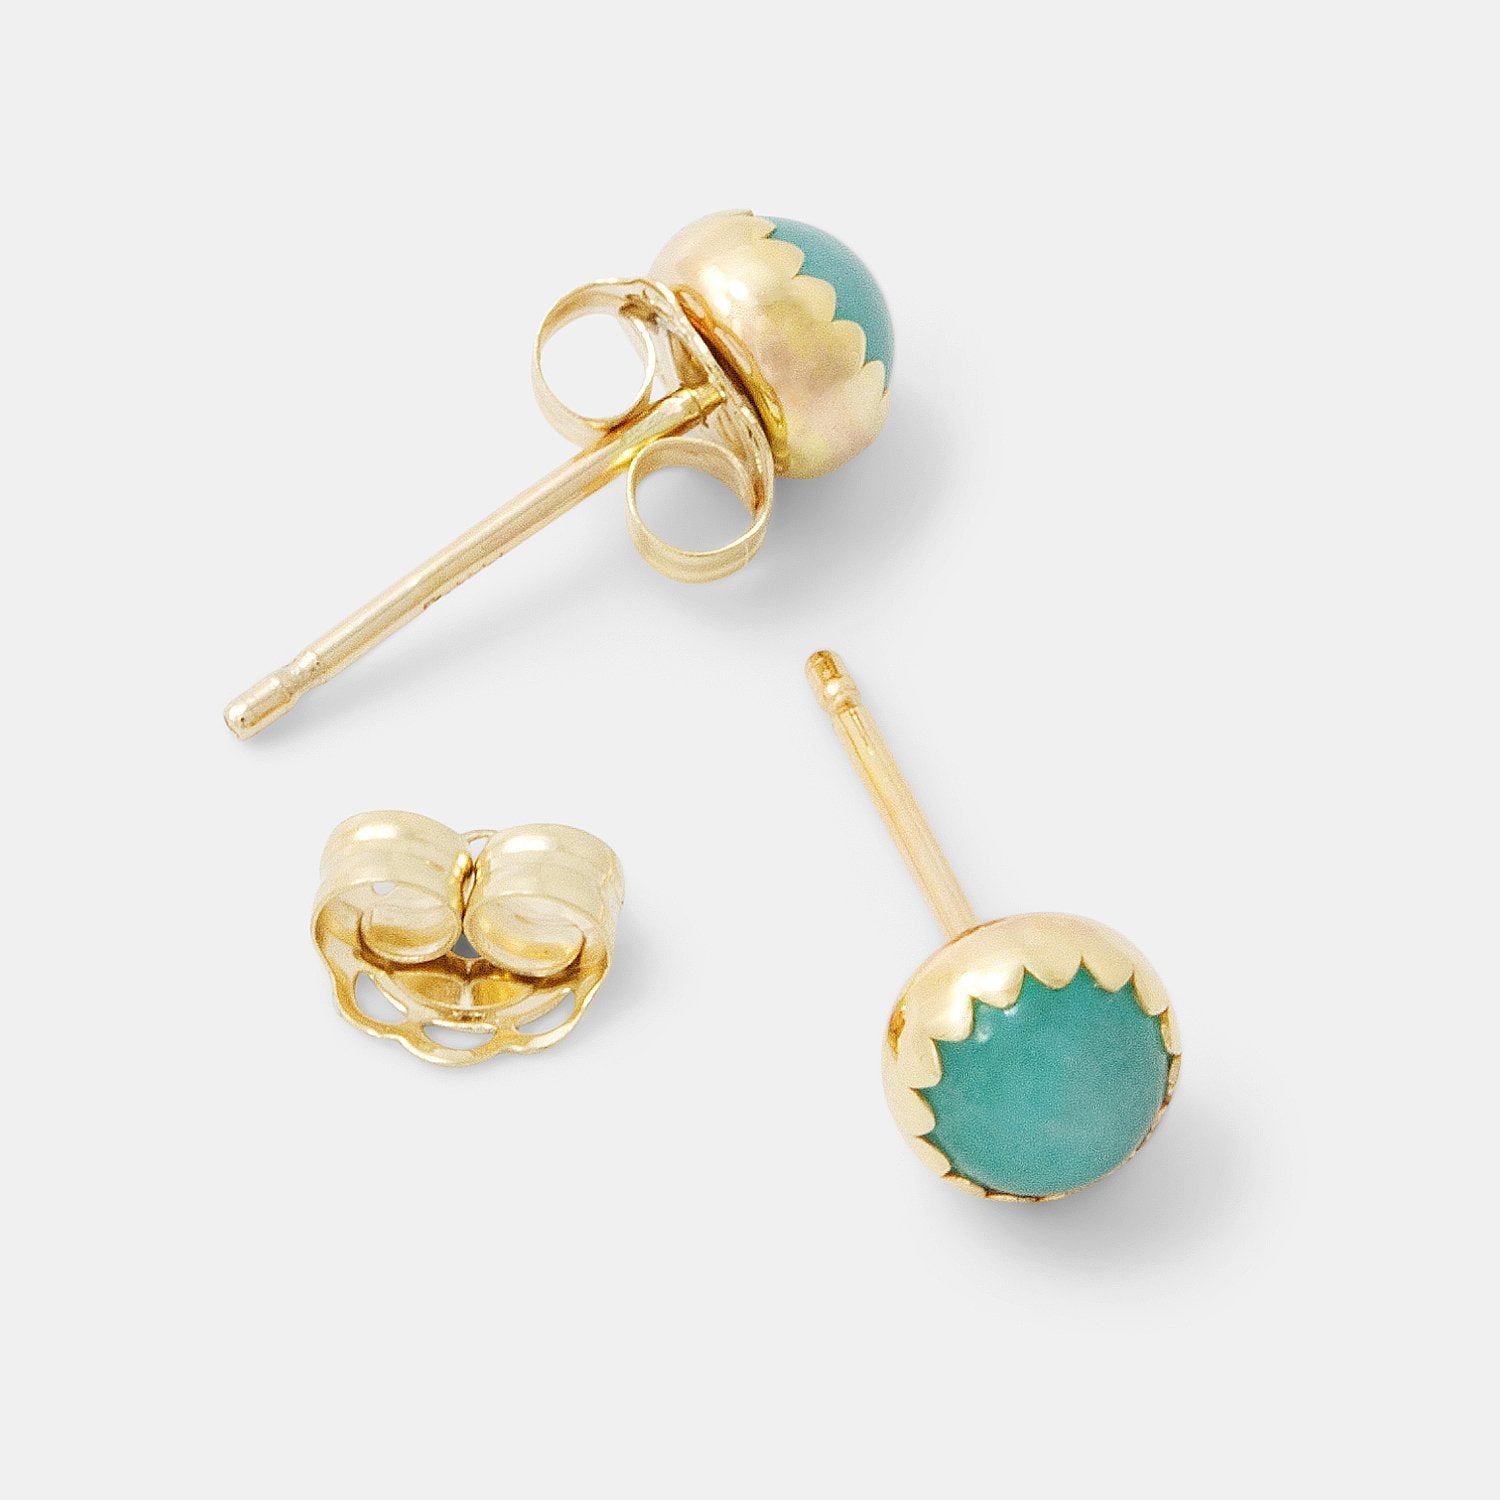 Amazonite & solid gold stud earrings - Simone Walsh Jewellery Australia